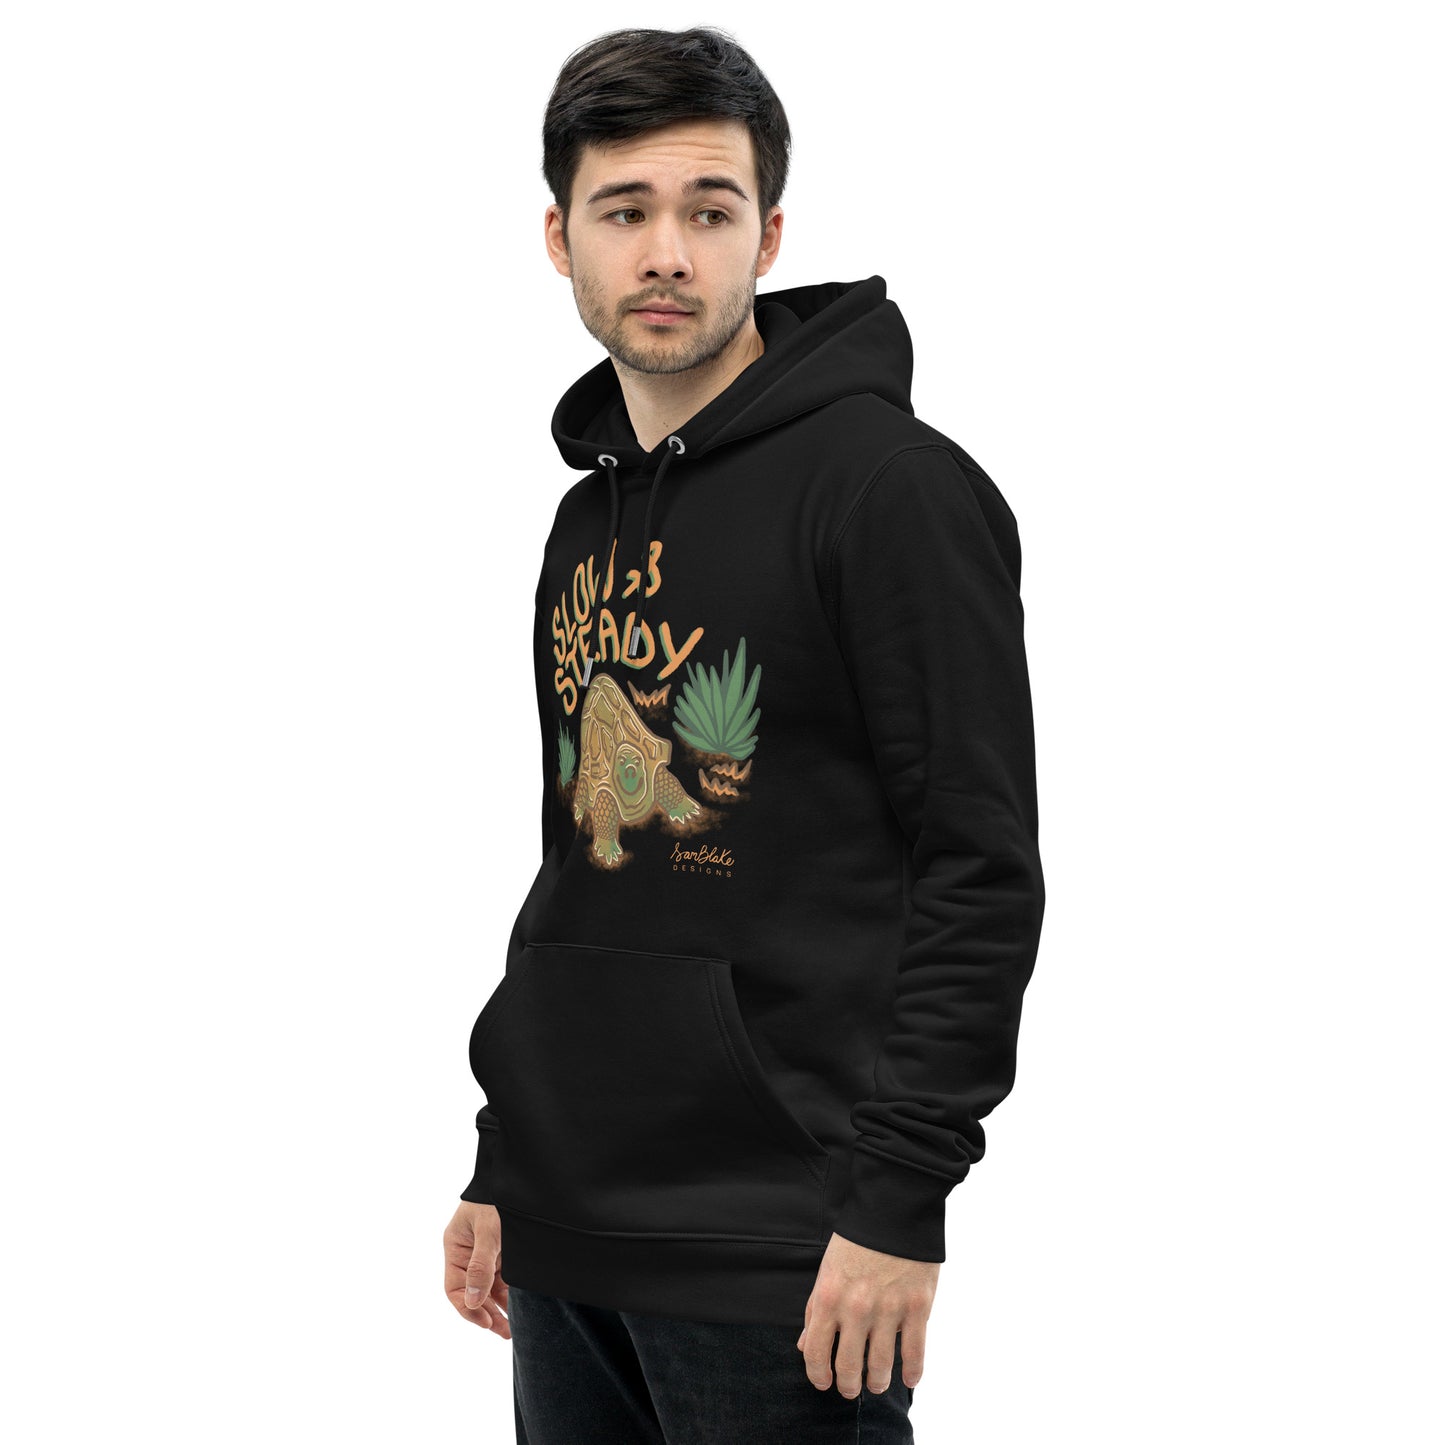 Slow & Steady- Unisex organic hoodie